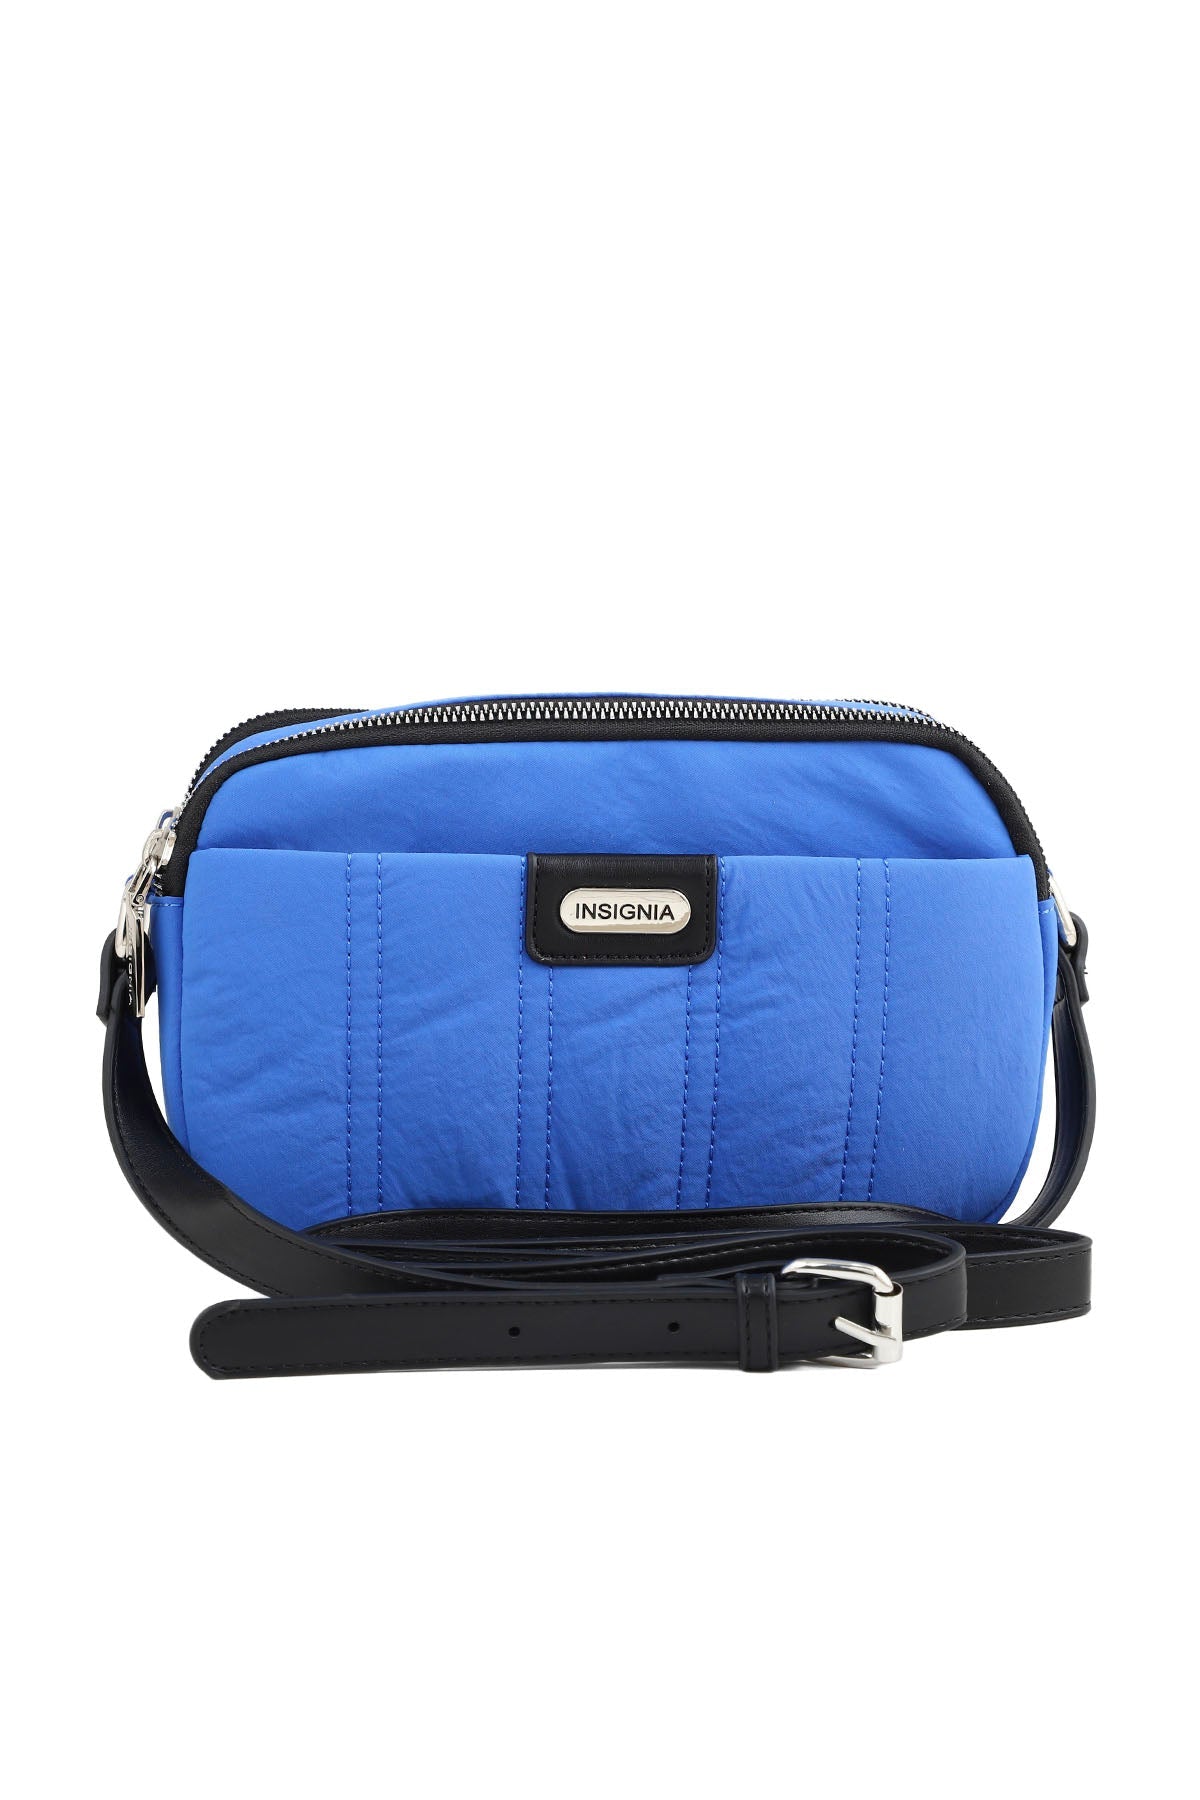 Cross Shoulder Bags B15014-Blue